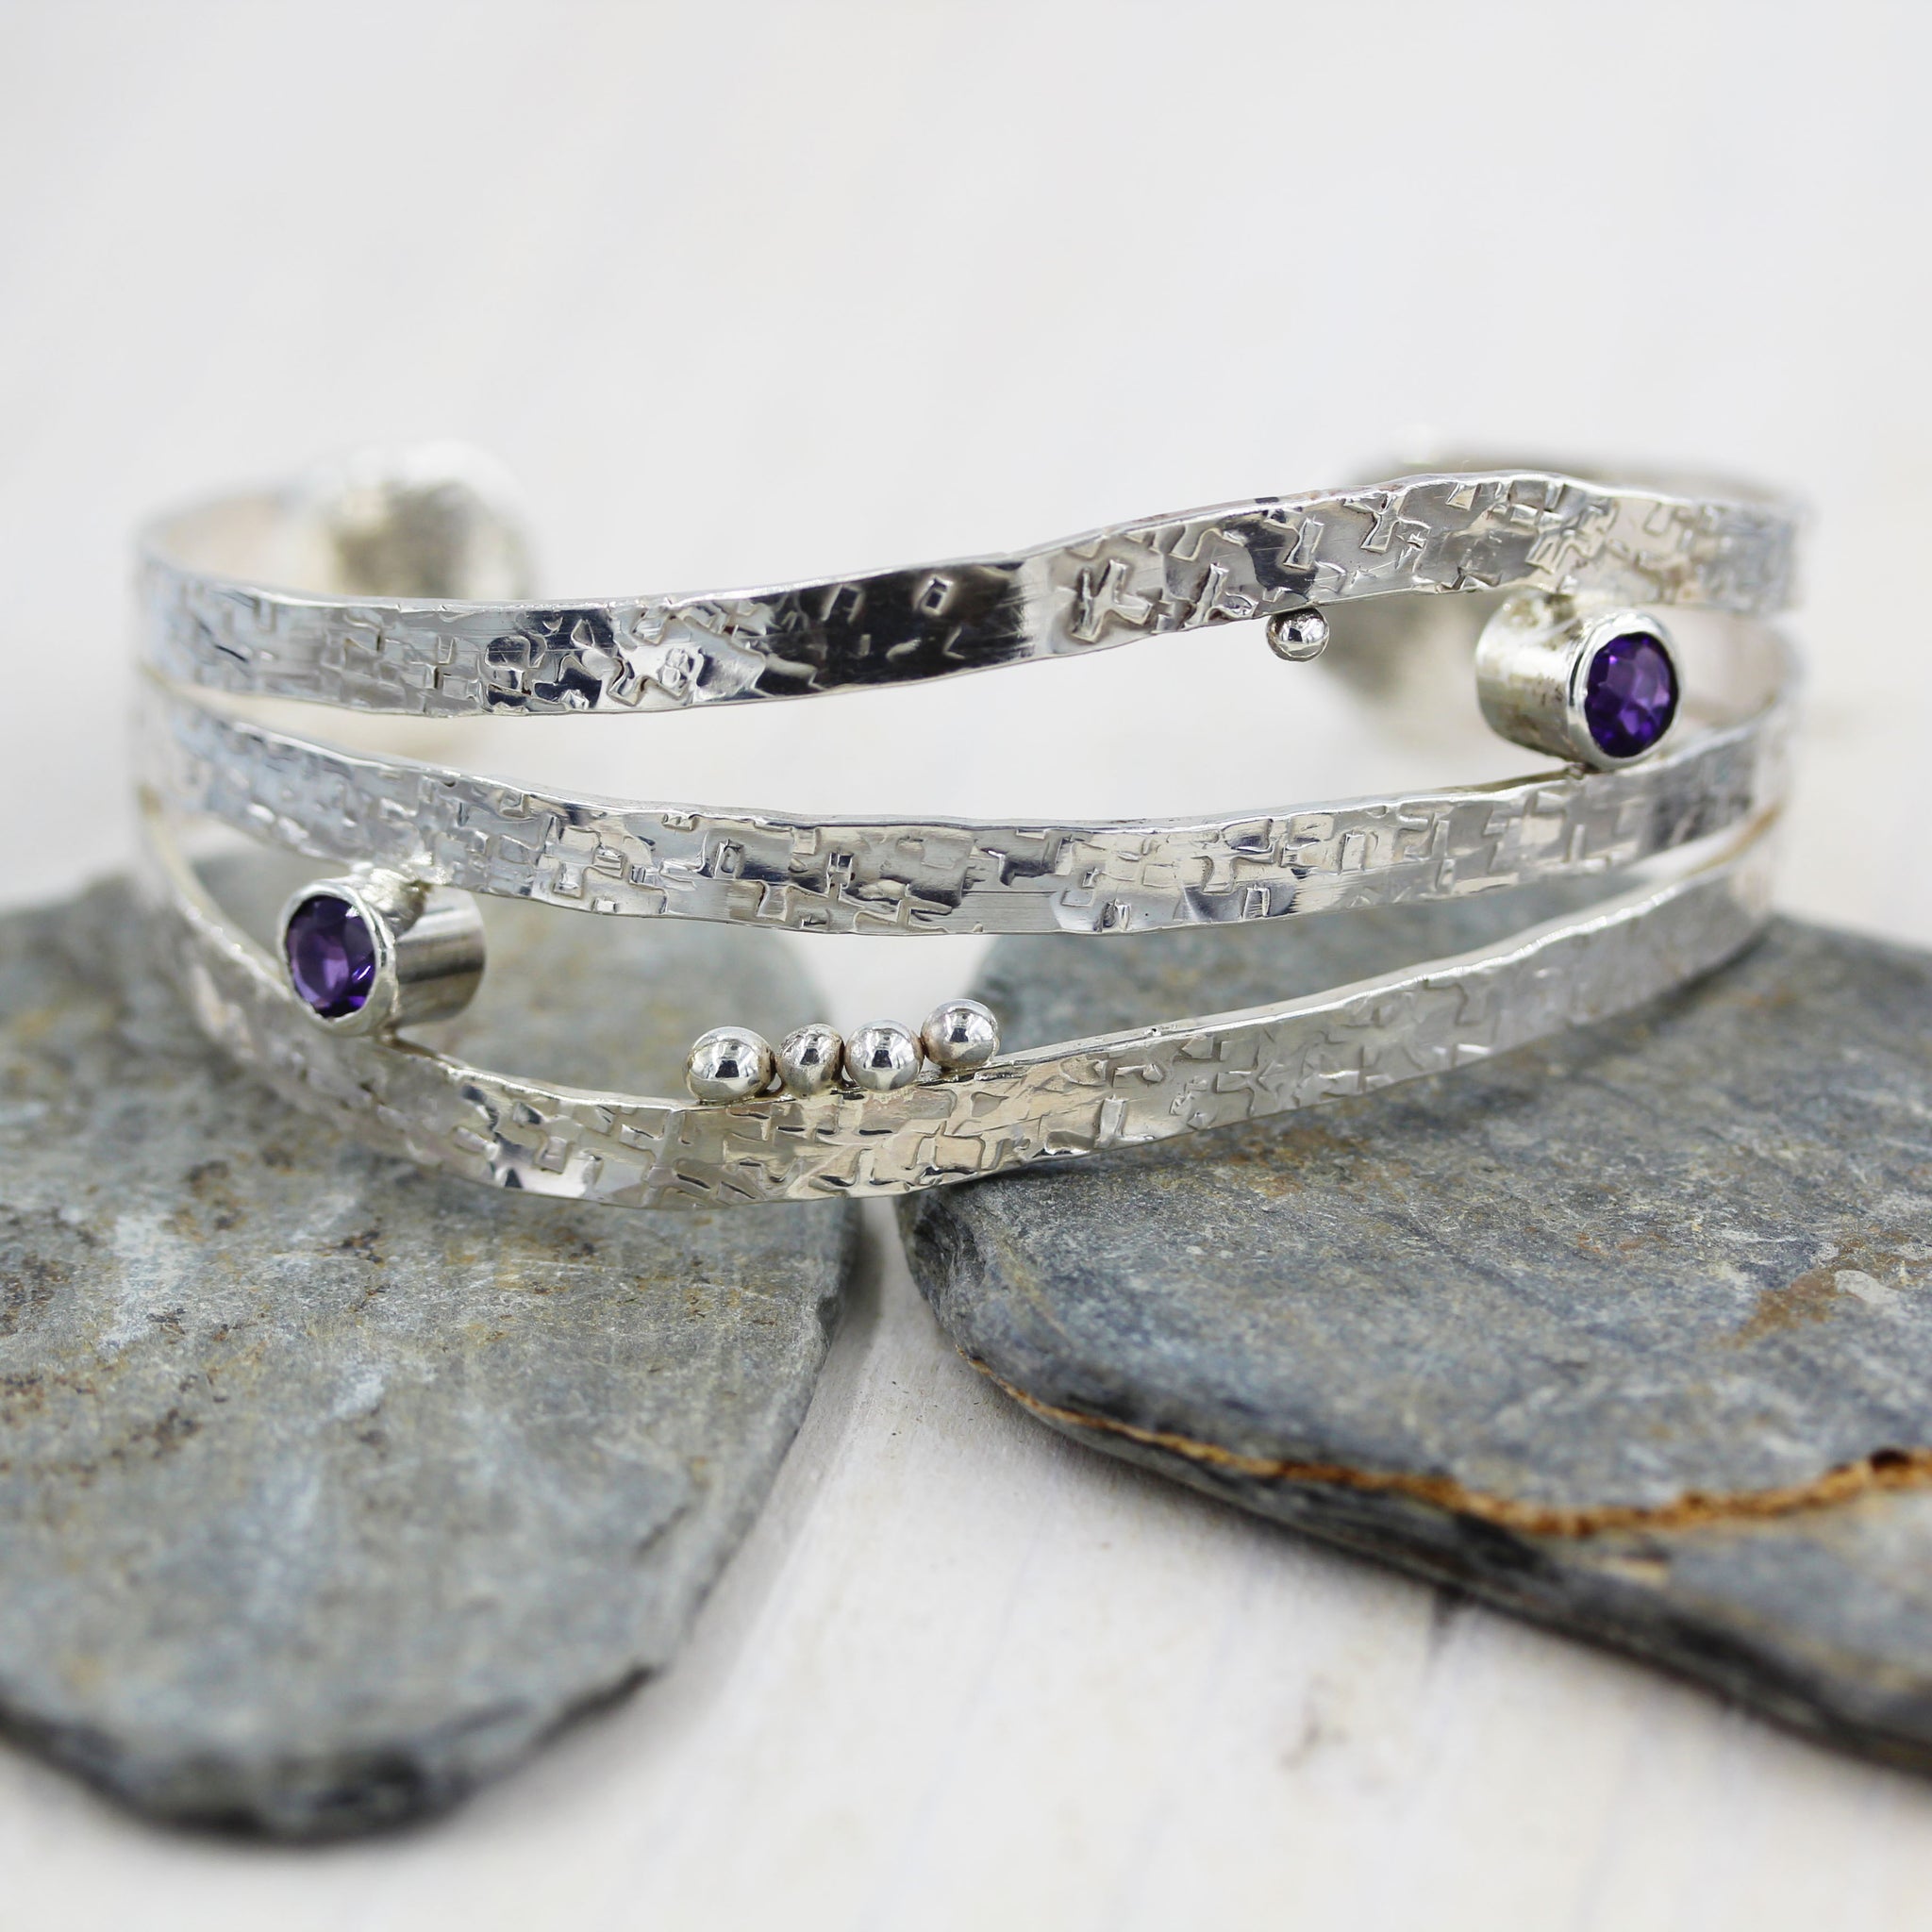 Handmade sterling silver  and amethyst sea inspired Cuff Bracelet by Gemma Tremayne Jewellery.